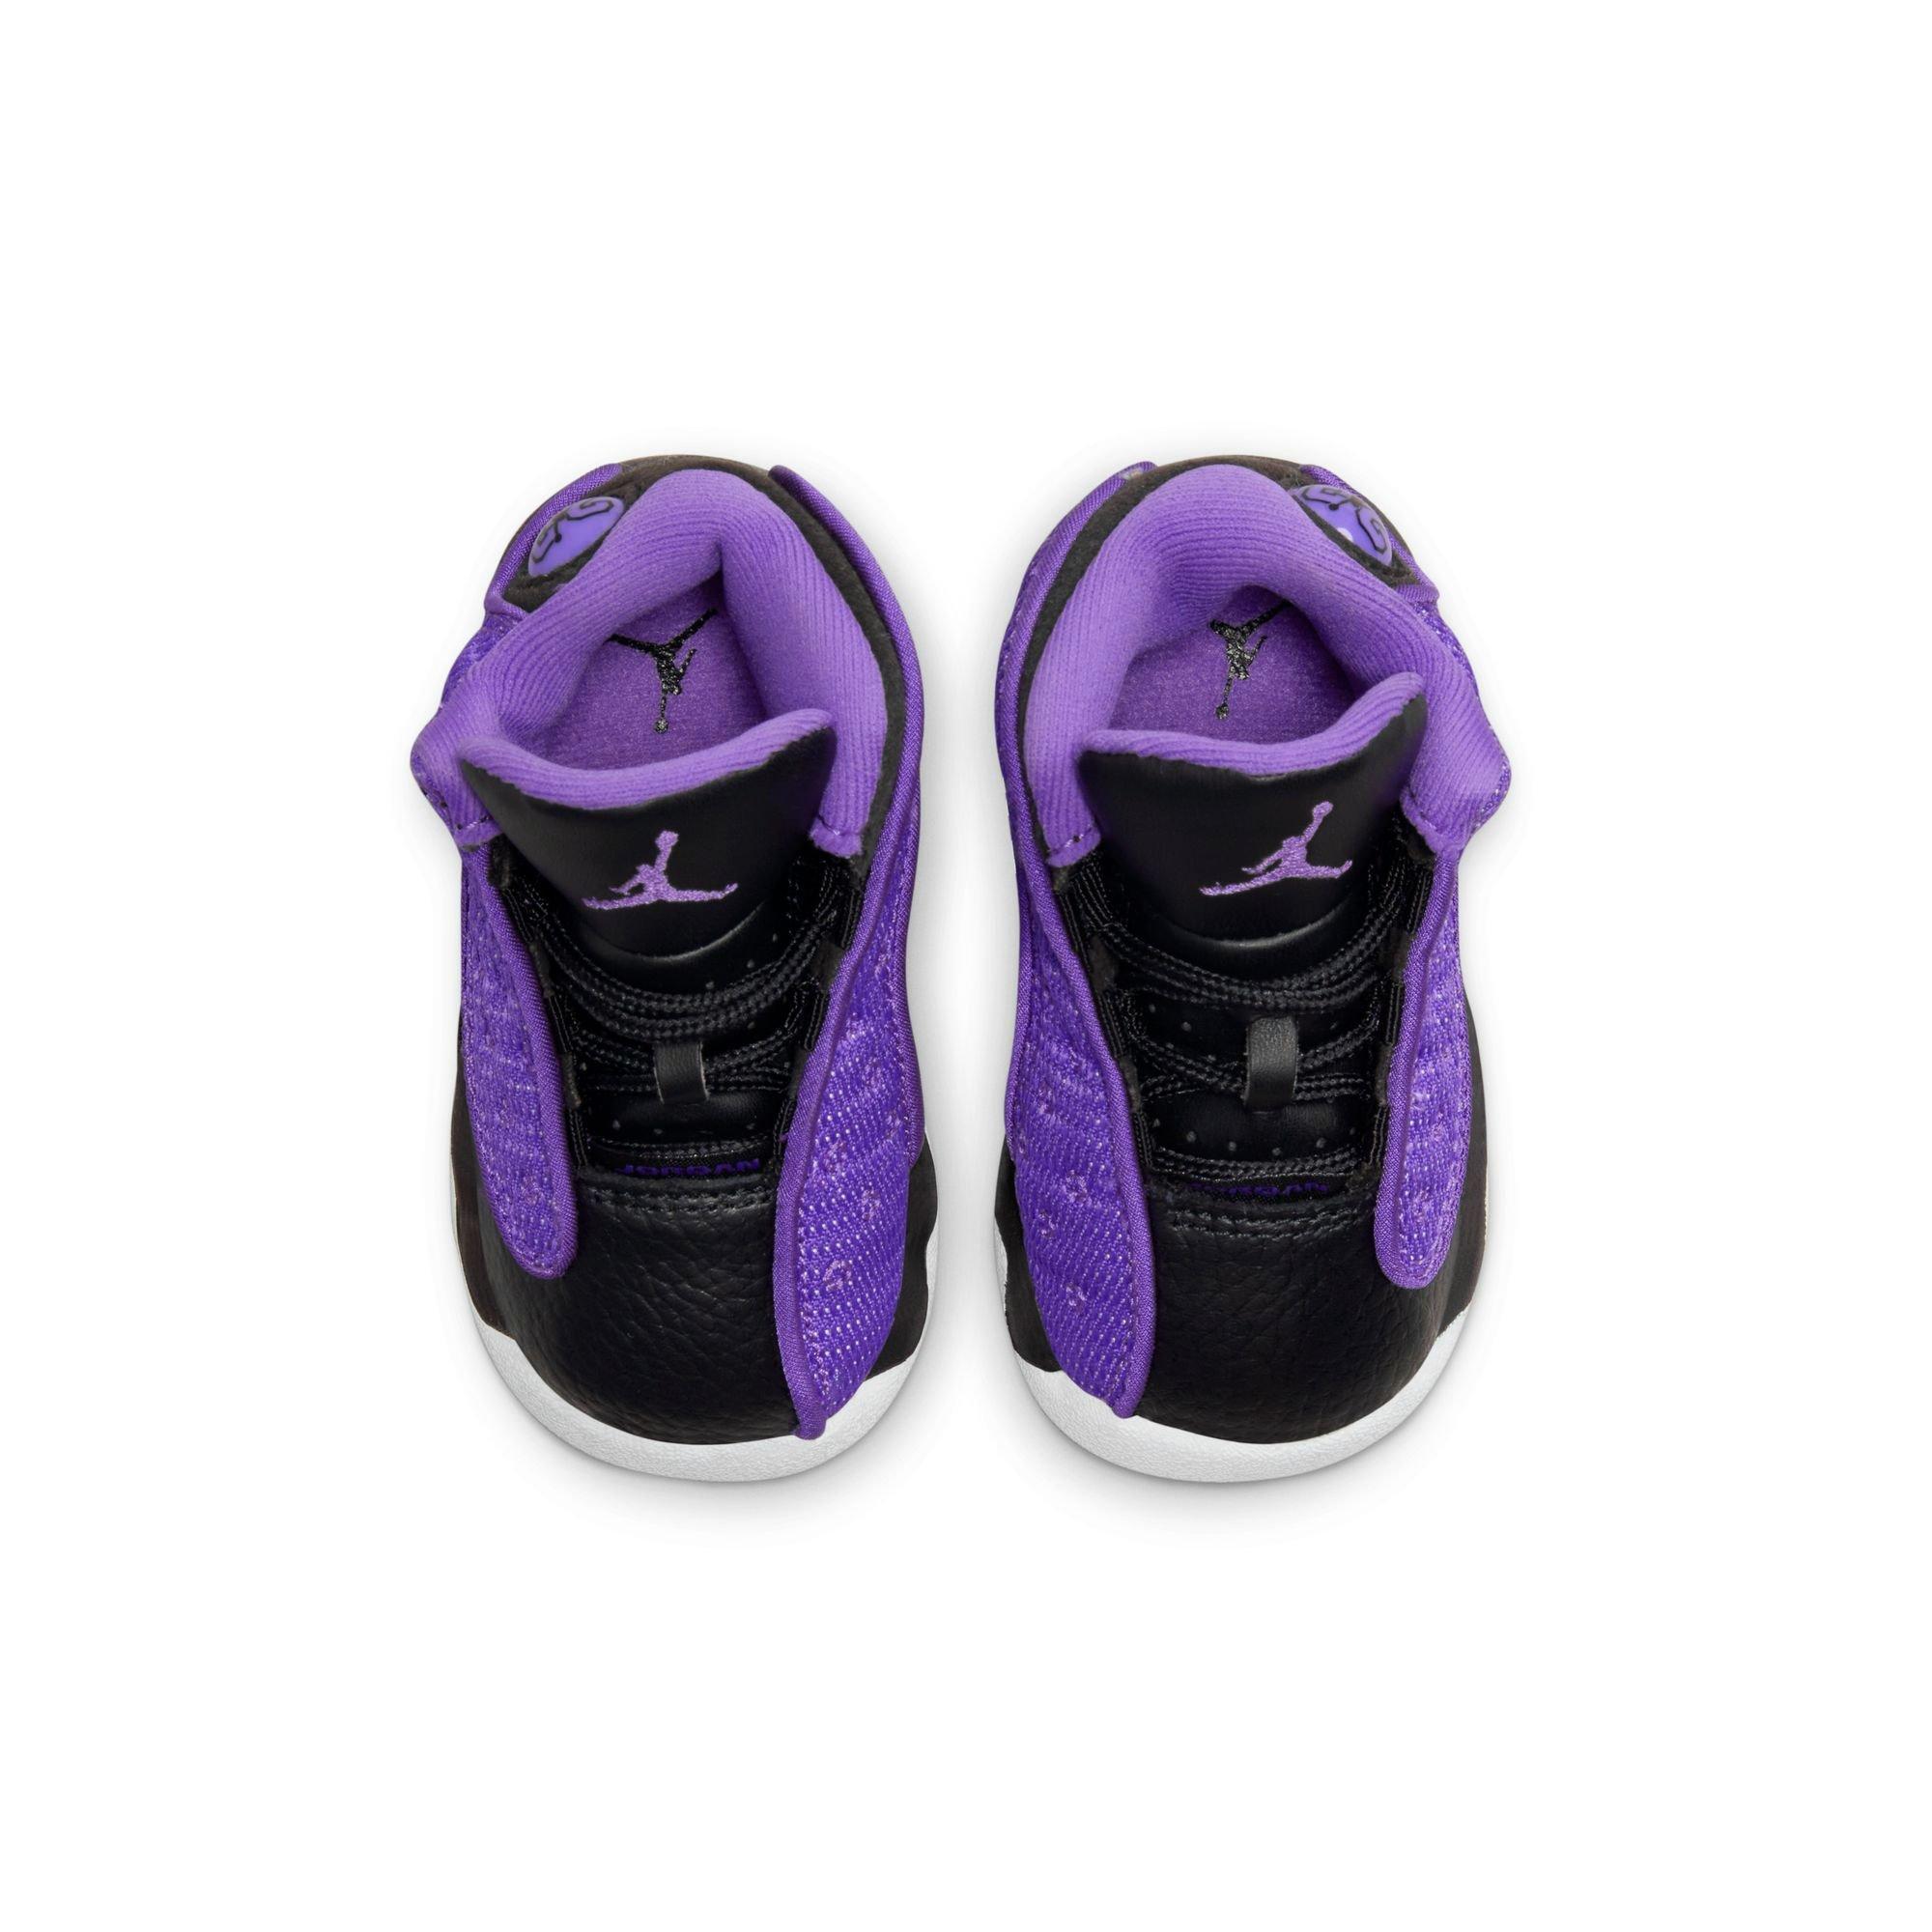 The Kids' Exclusive Air Jordan 13 Purple Venom Releases October 2